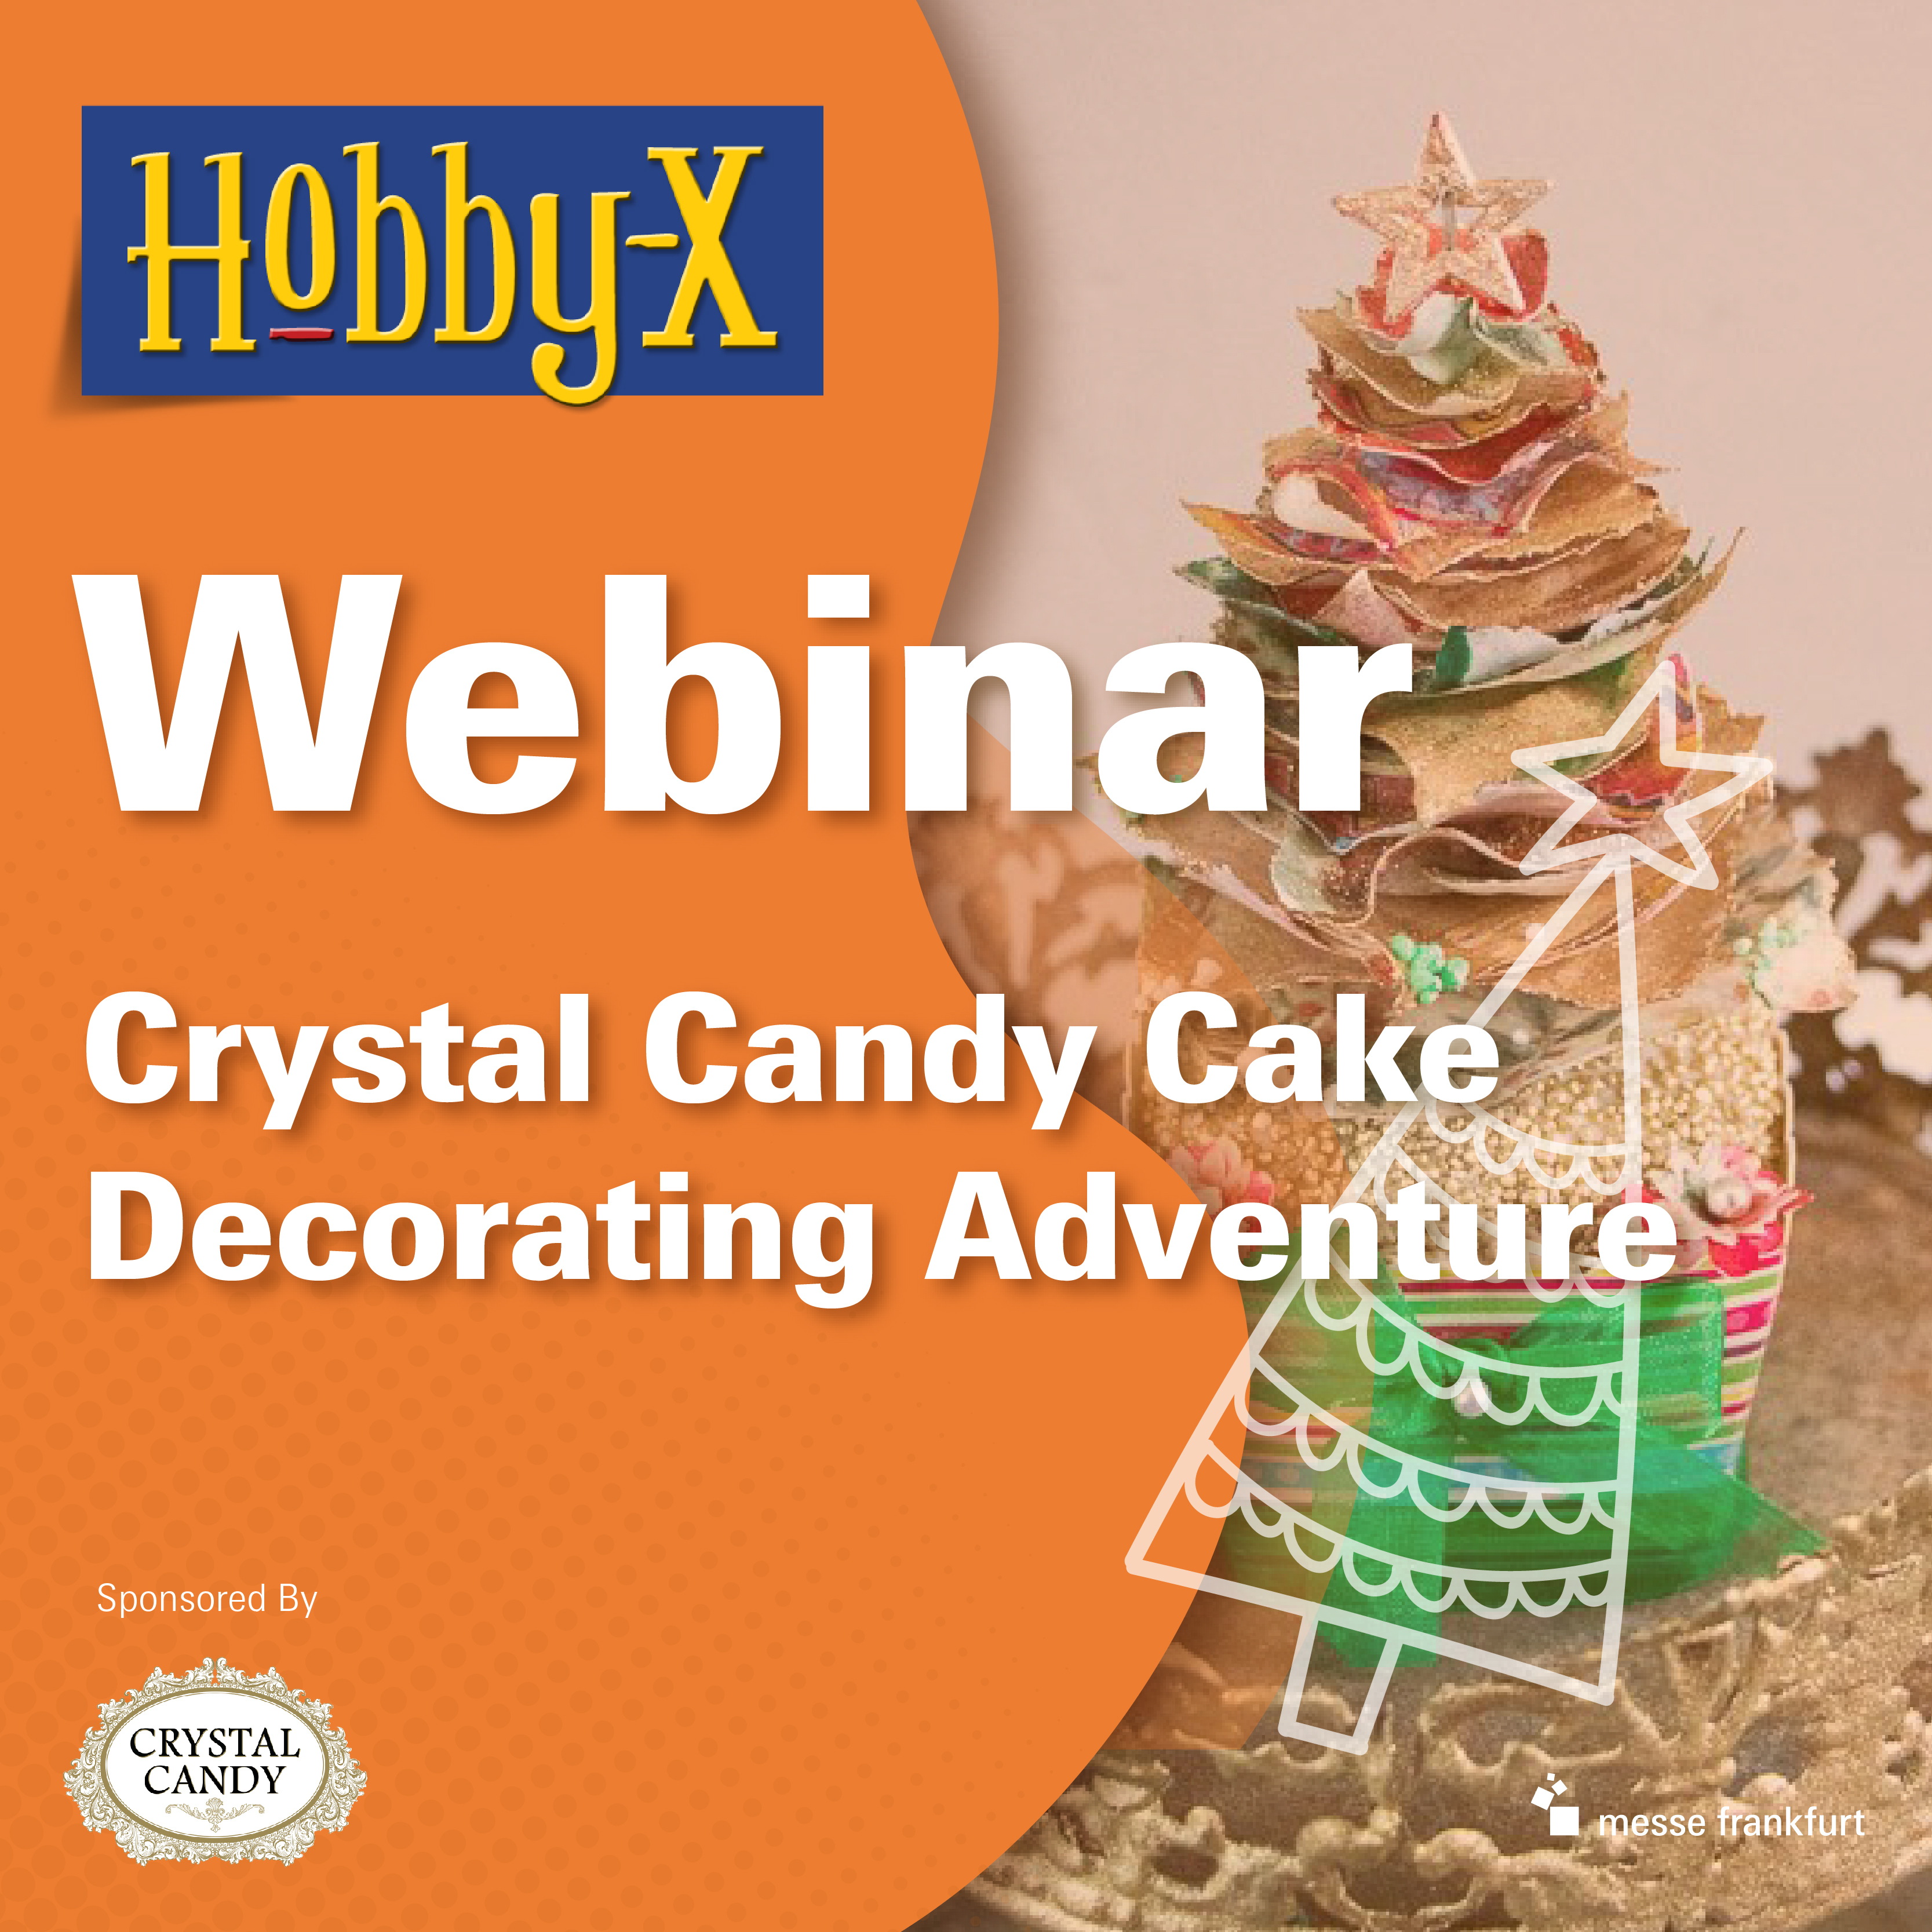 Hobby-X Webinar Faceboook Post - Crystal Candy Christmas Adventure - 25.11.20